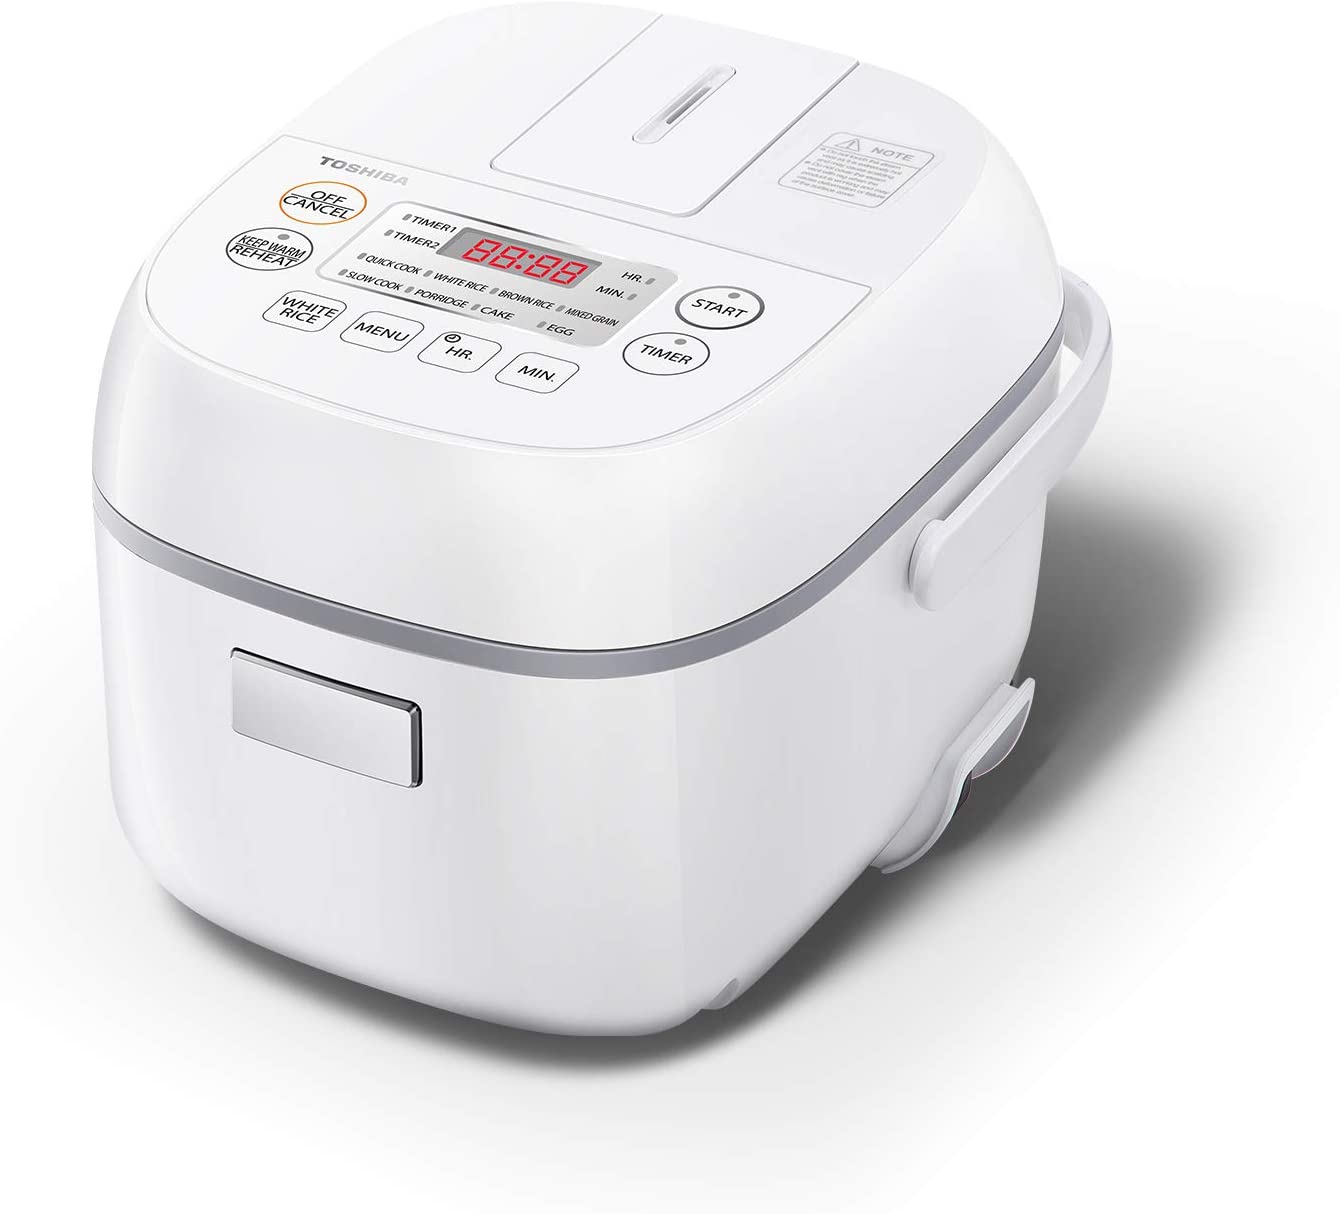 Toshiba Digital Programmable Rice Cooker, Steamer & Warmer